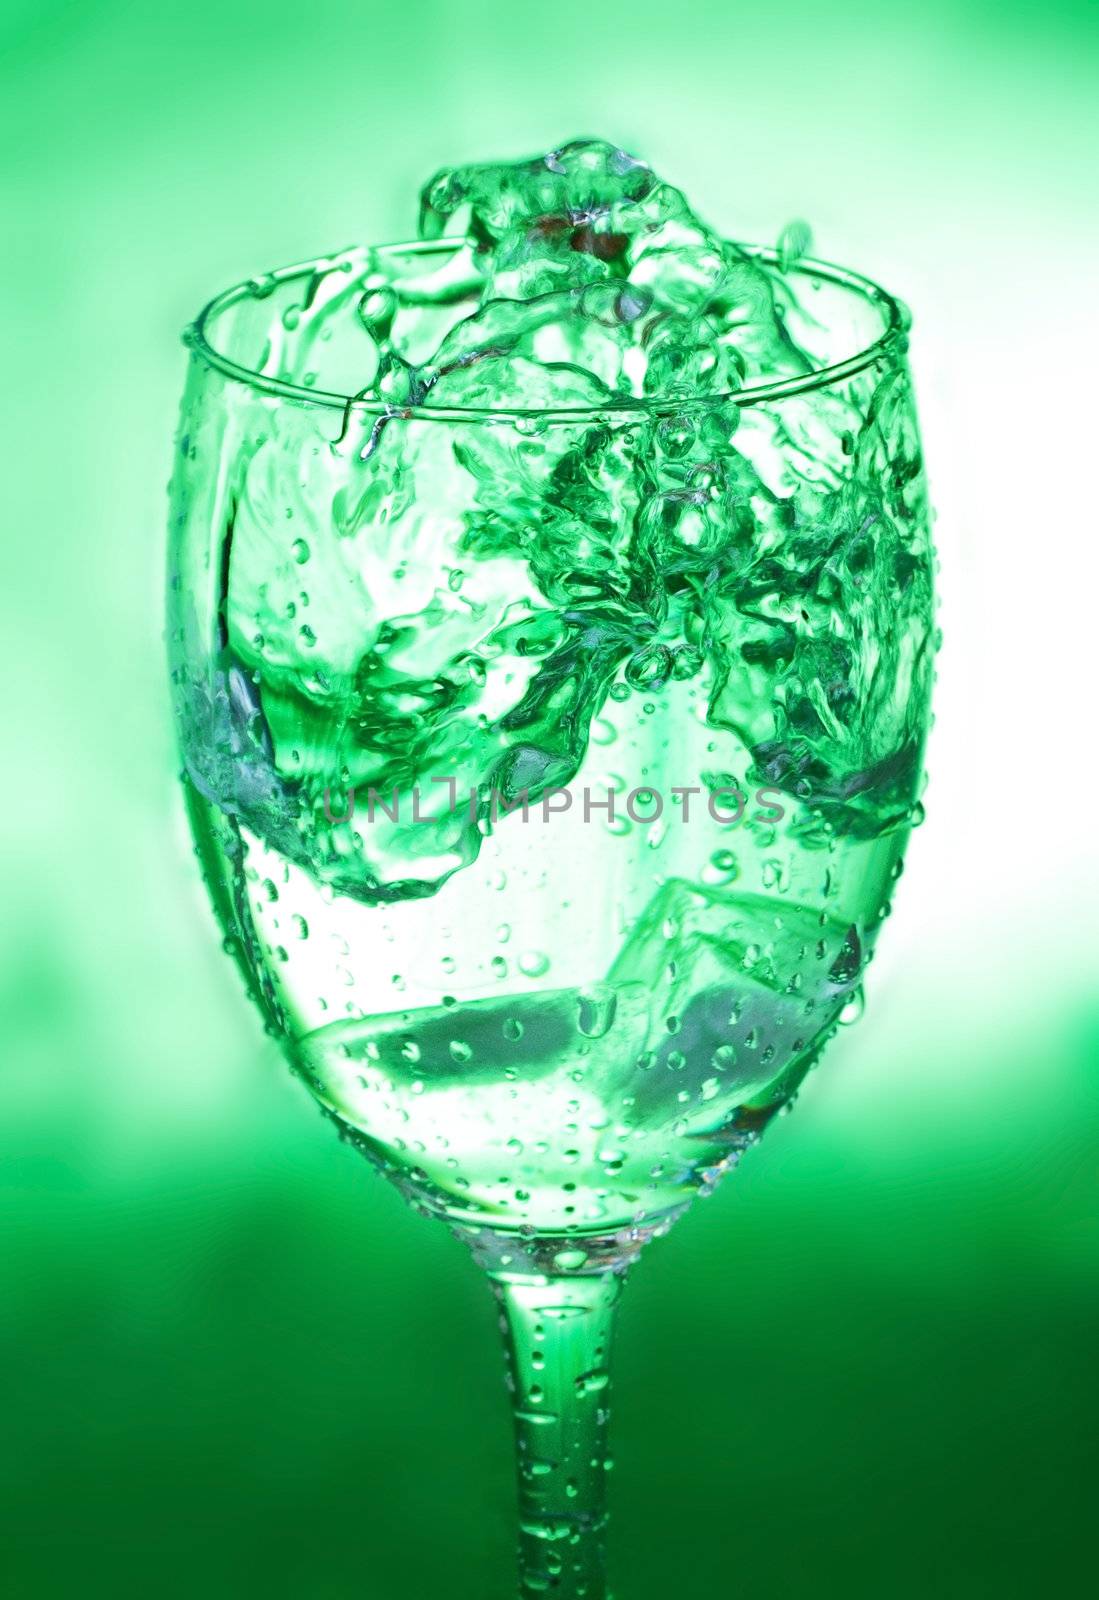 glass with splash on green background by Alekcey